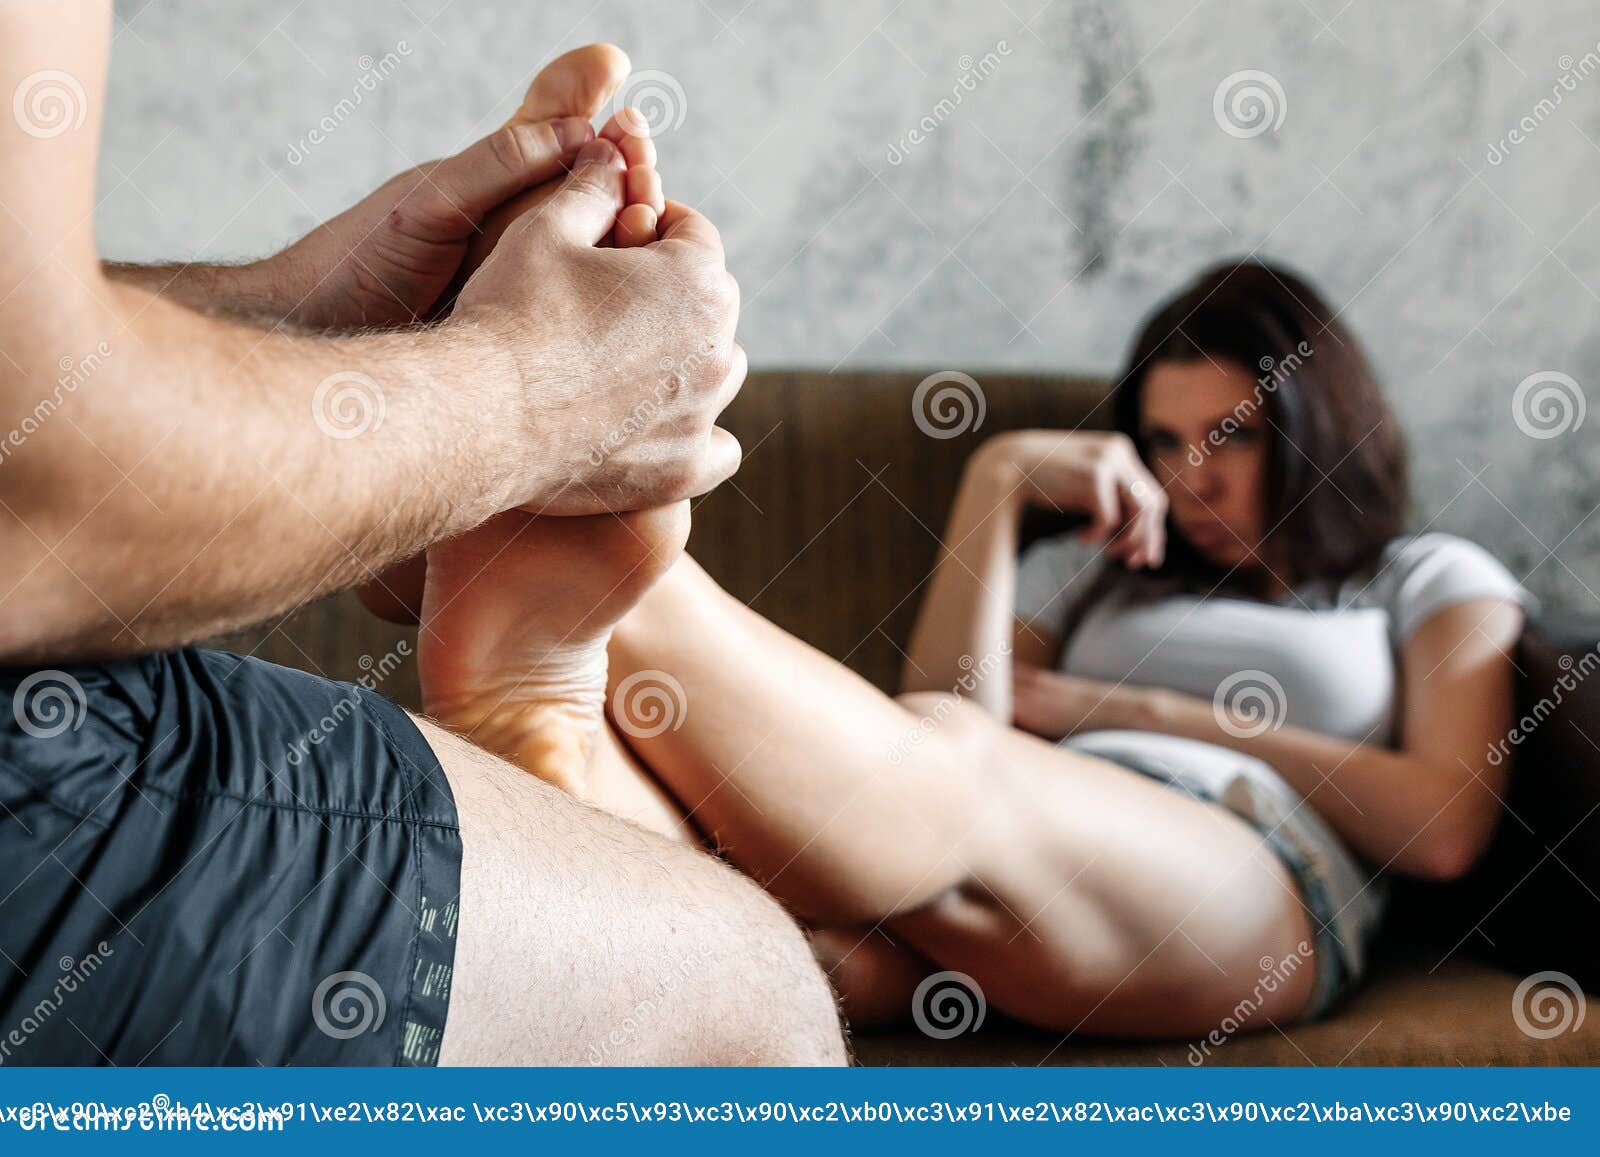 Foot Massage Wife Stock Photos